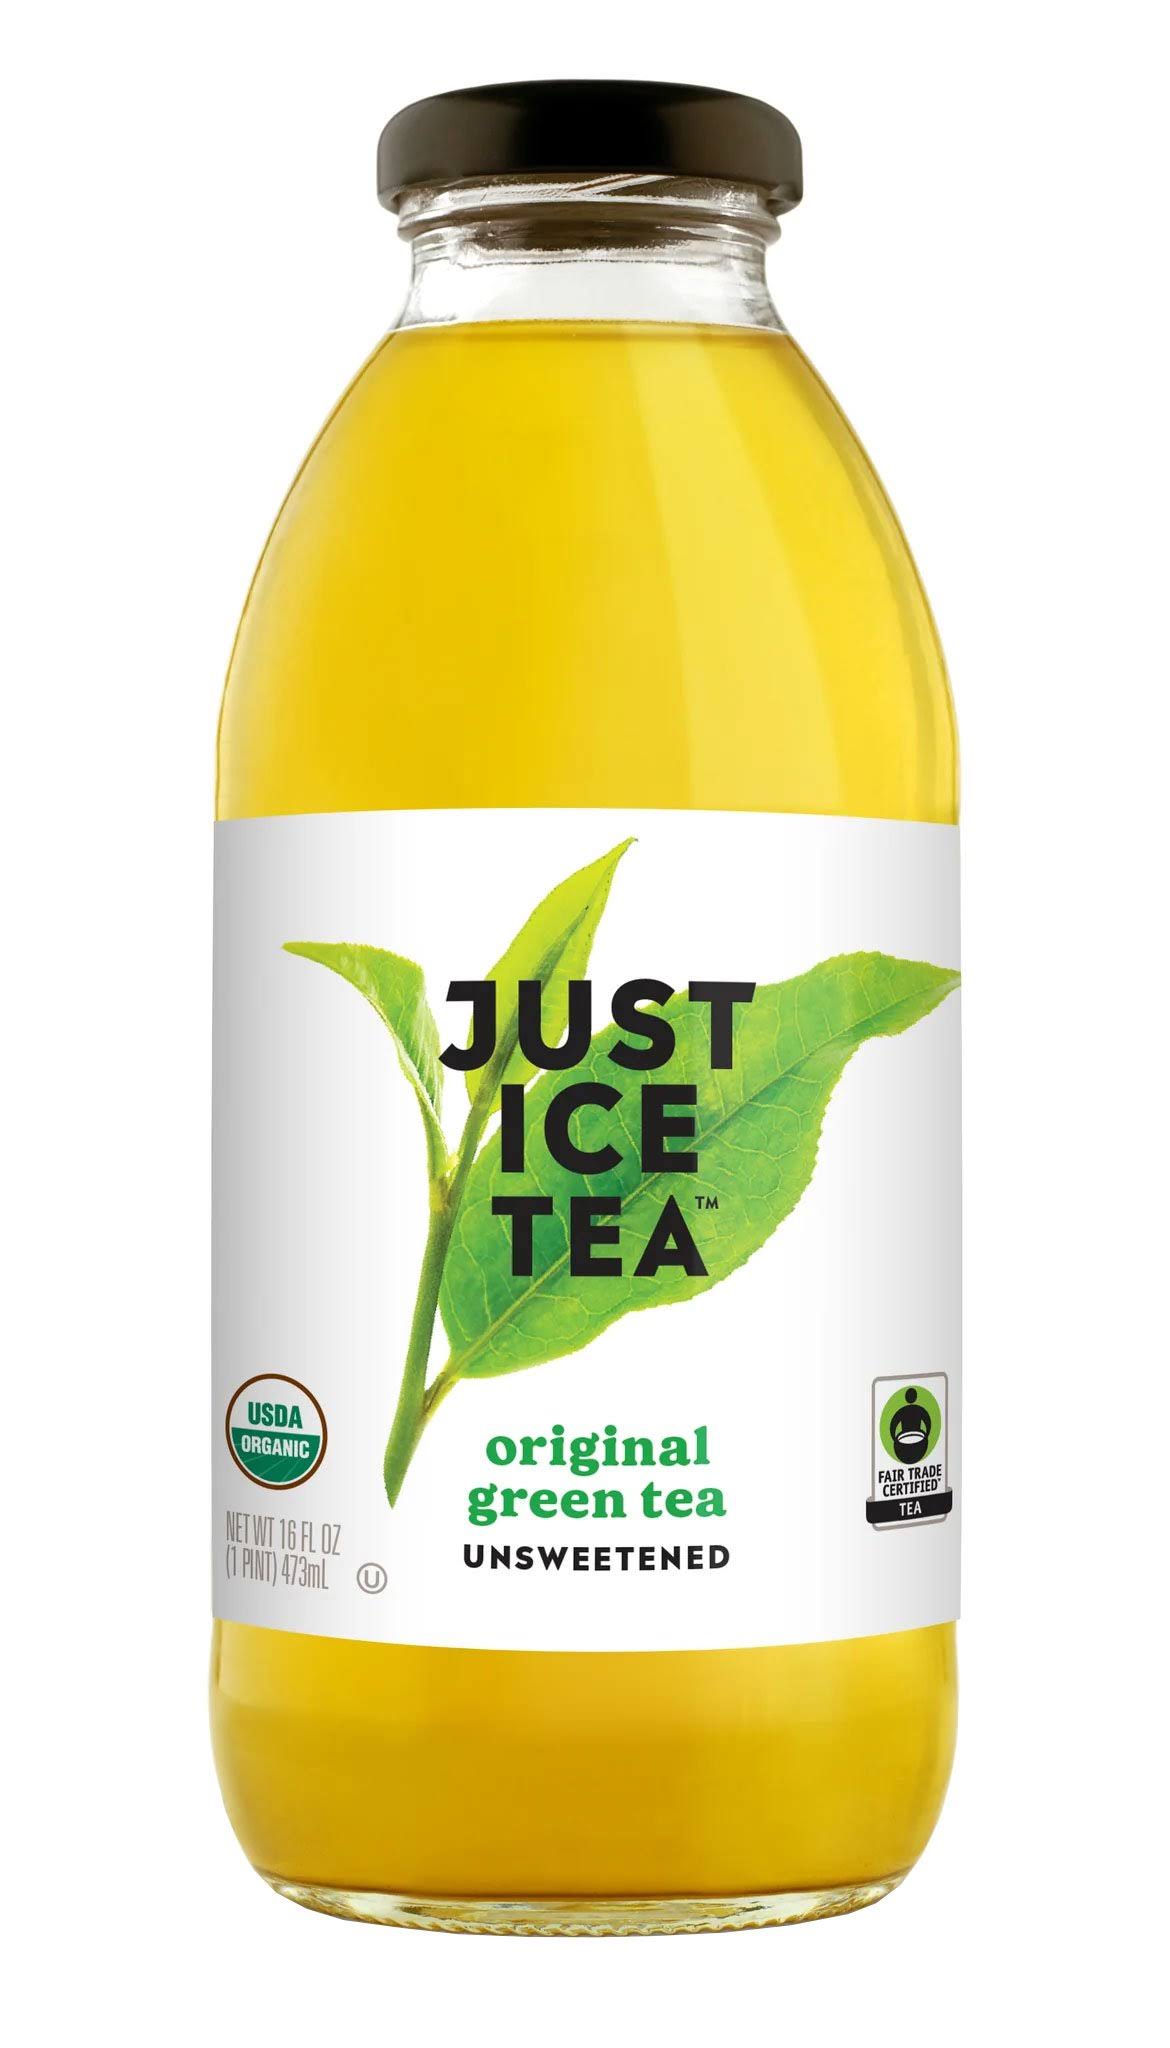 Just Ice Tea Original Green Tea 16 fl oz